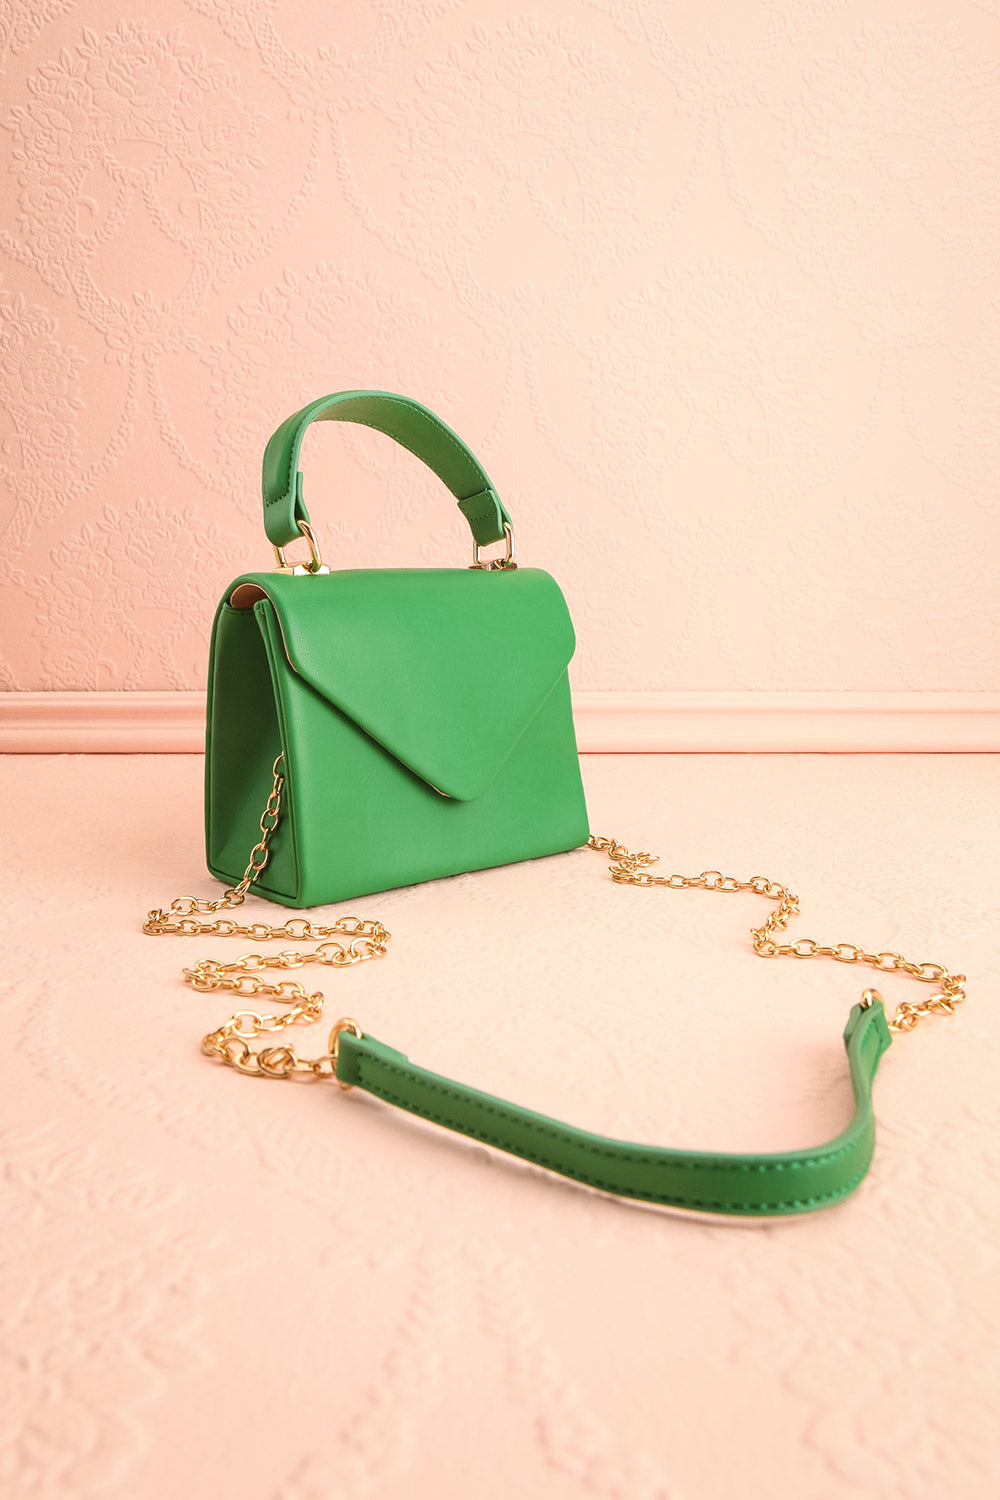 Slovia Green Small Handbag w/ Removable Chain Strap | Boutique 1861 side view